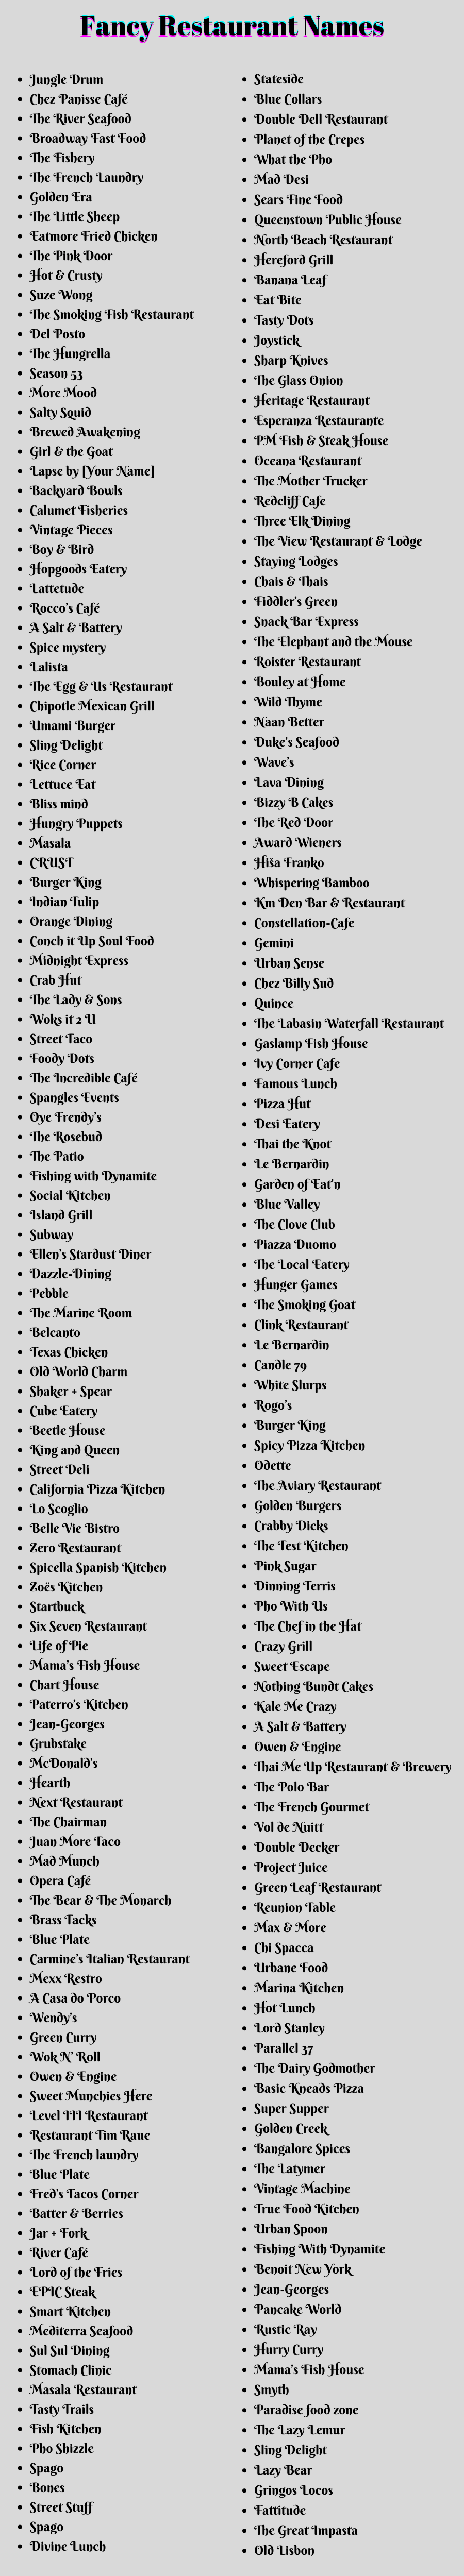 Fancy Restaurant Names